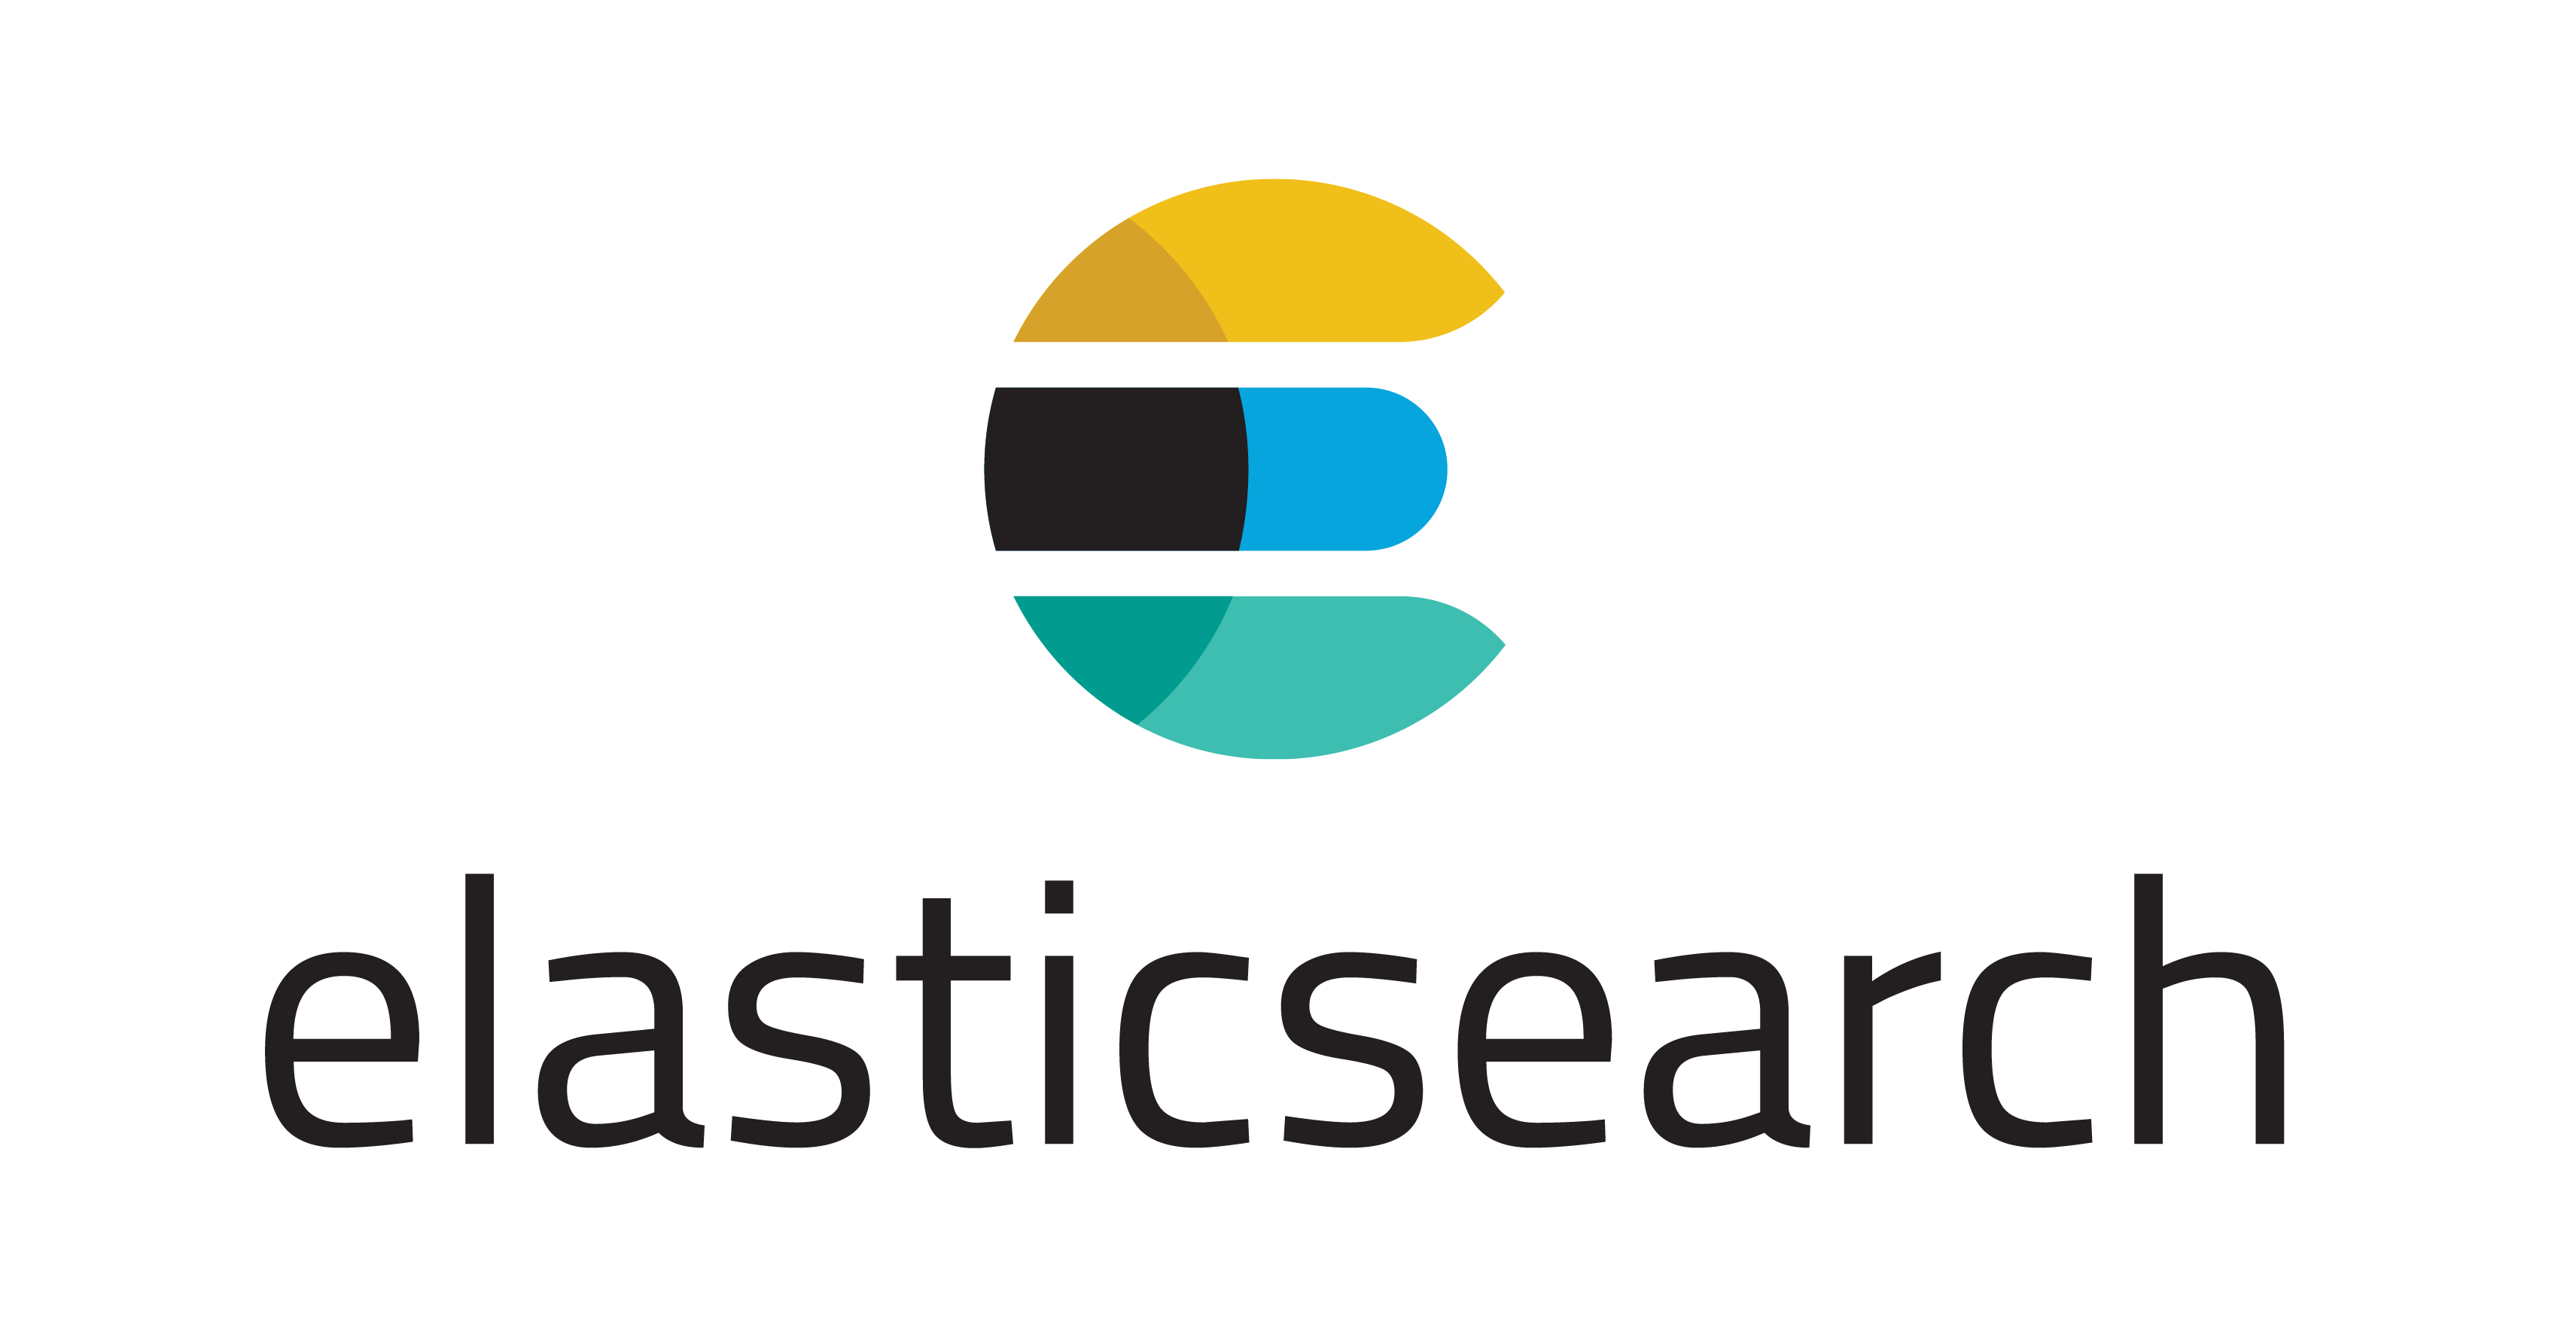 Spring Data Elasticsearch 설정 및 검색 기능 구현